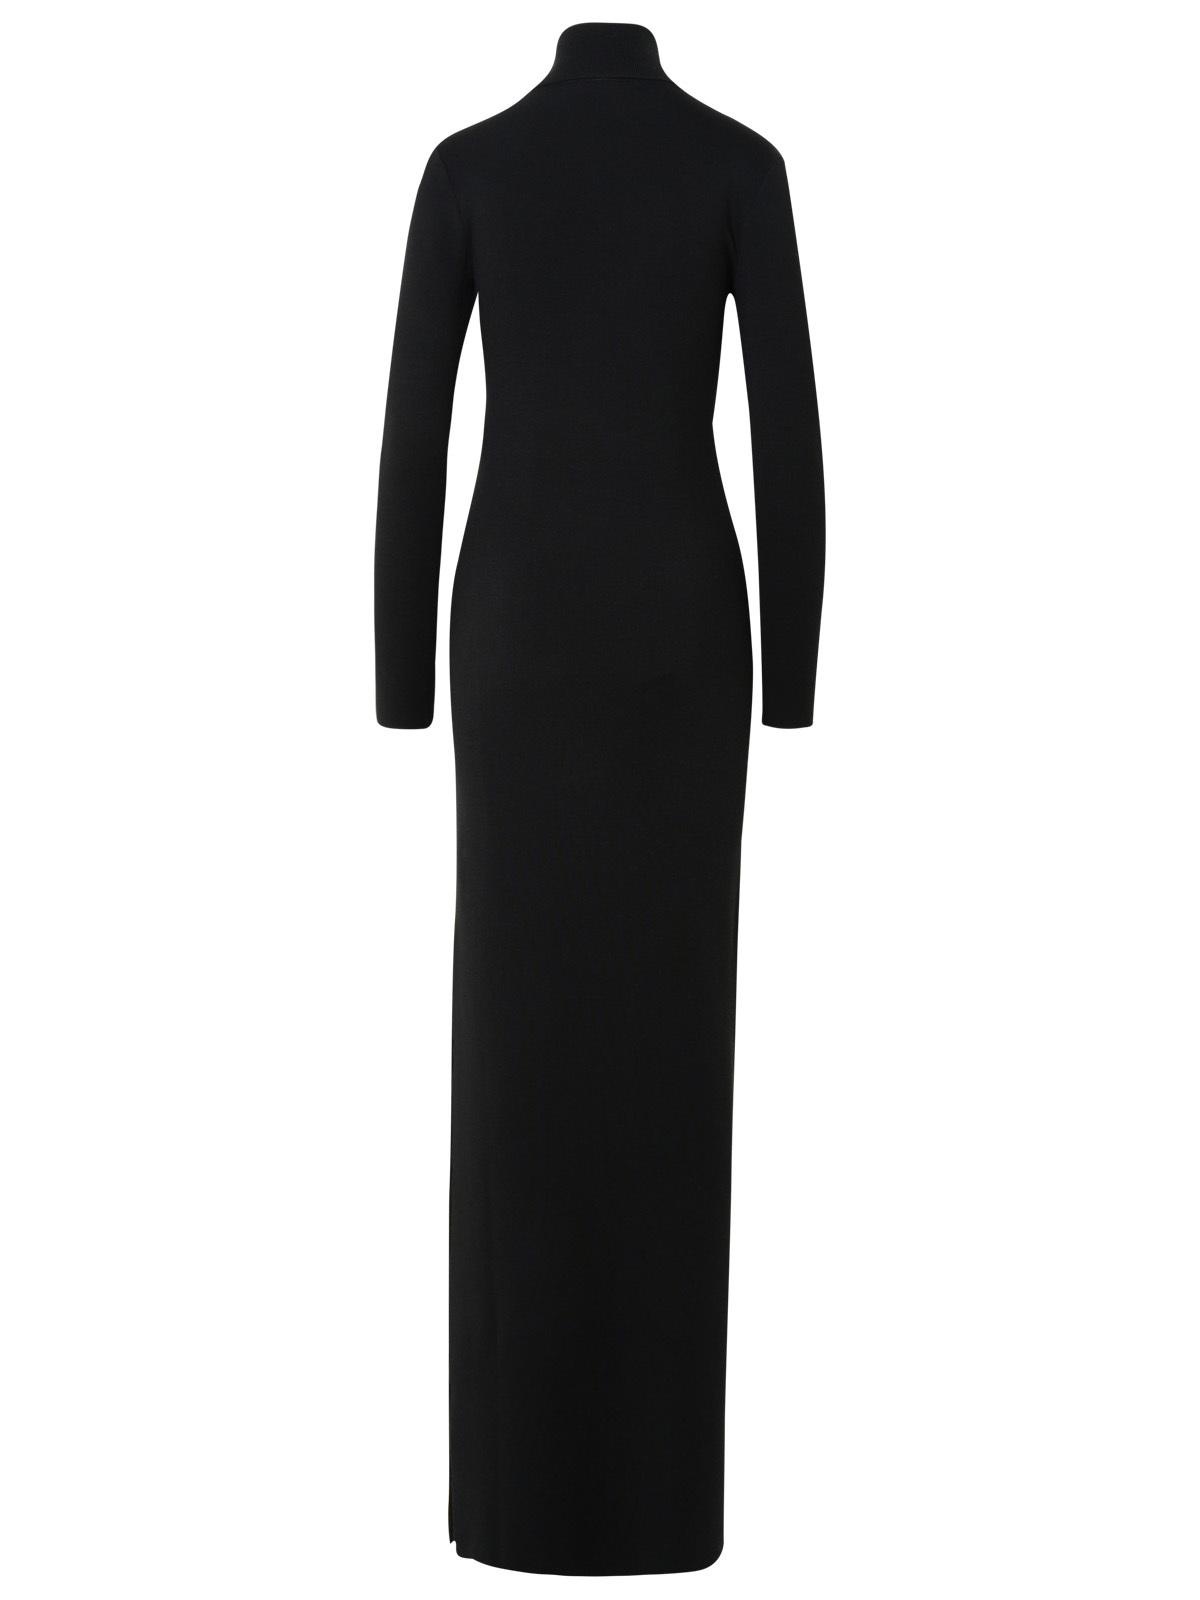 Saint Laurent Black Virgin Wool Dress - 3